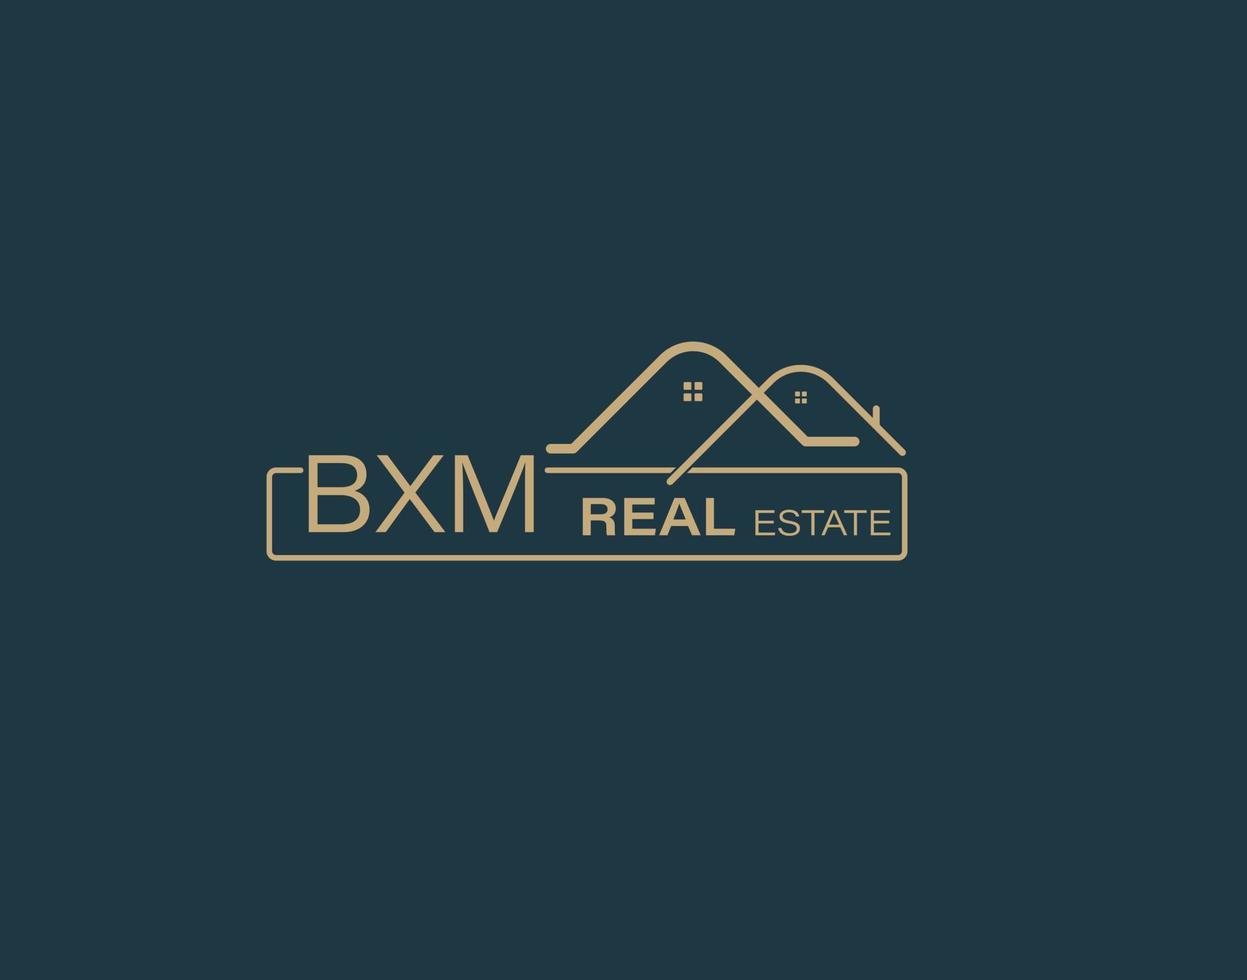 BXM Real Estate and Consultants Logo Design Vectors images. Luxury Real Estate Logo Design